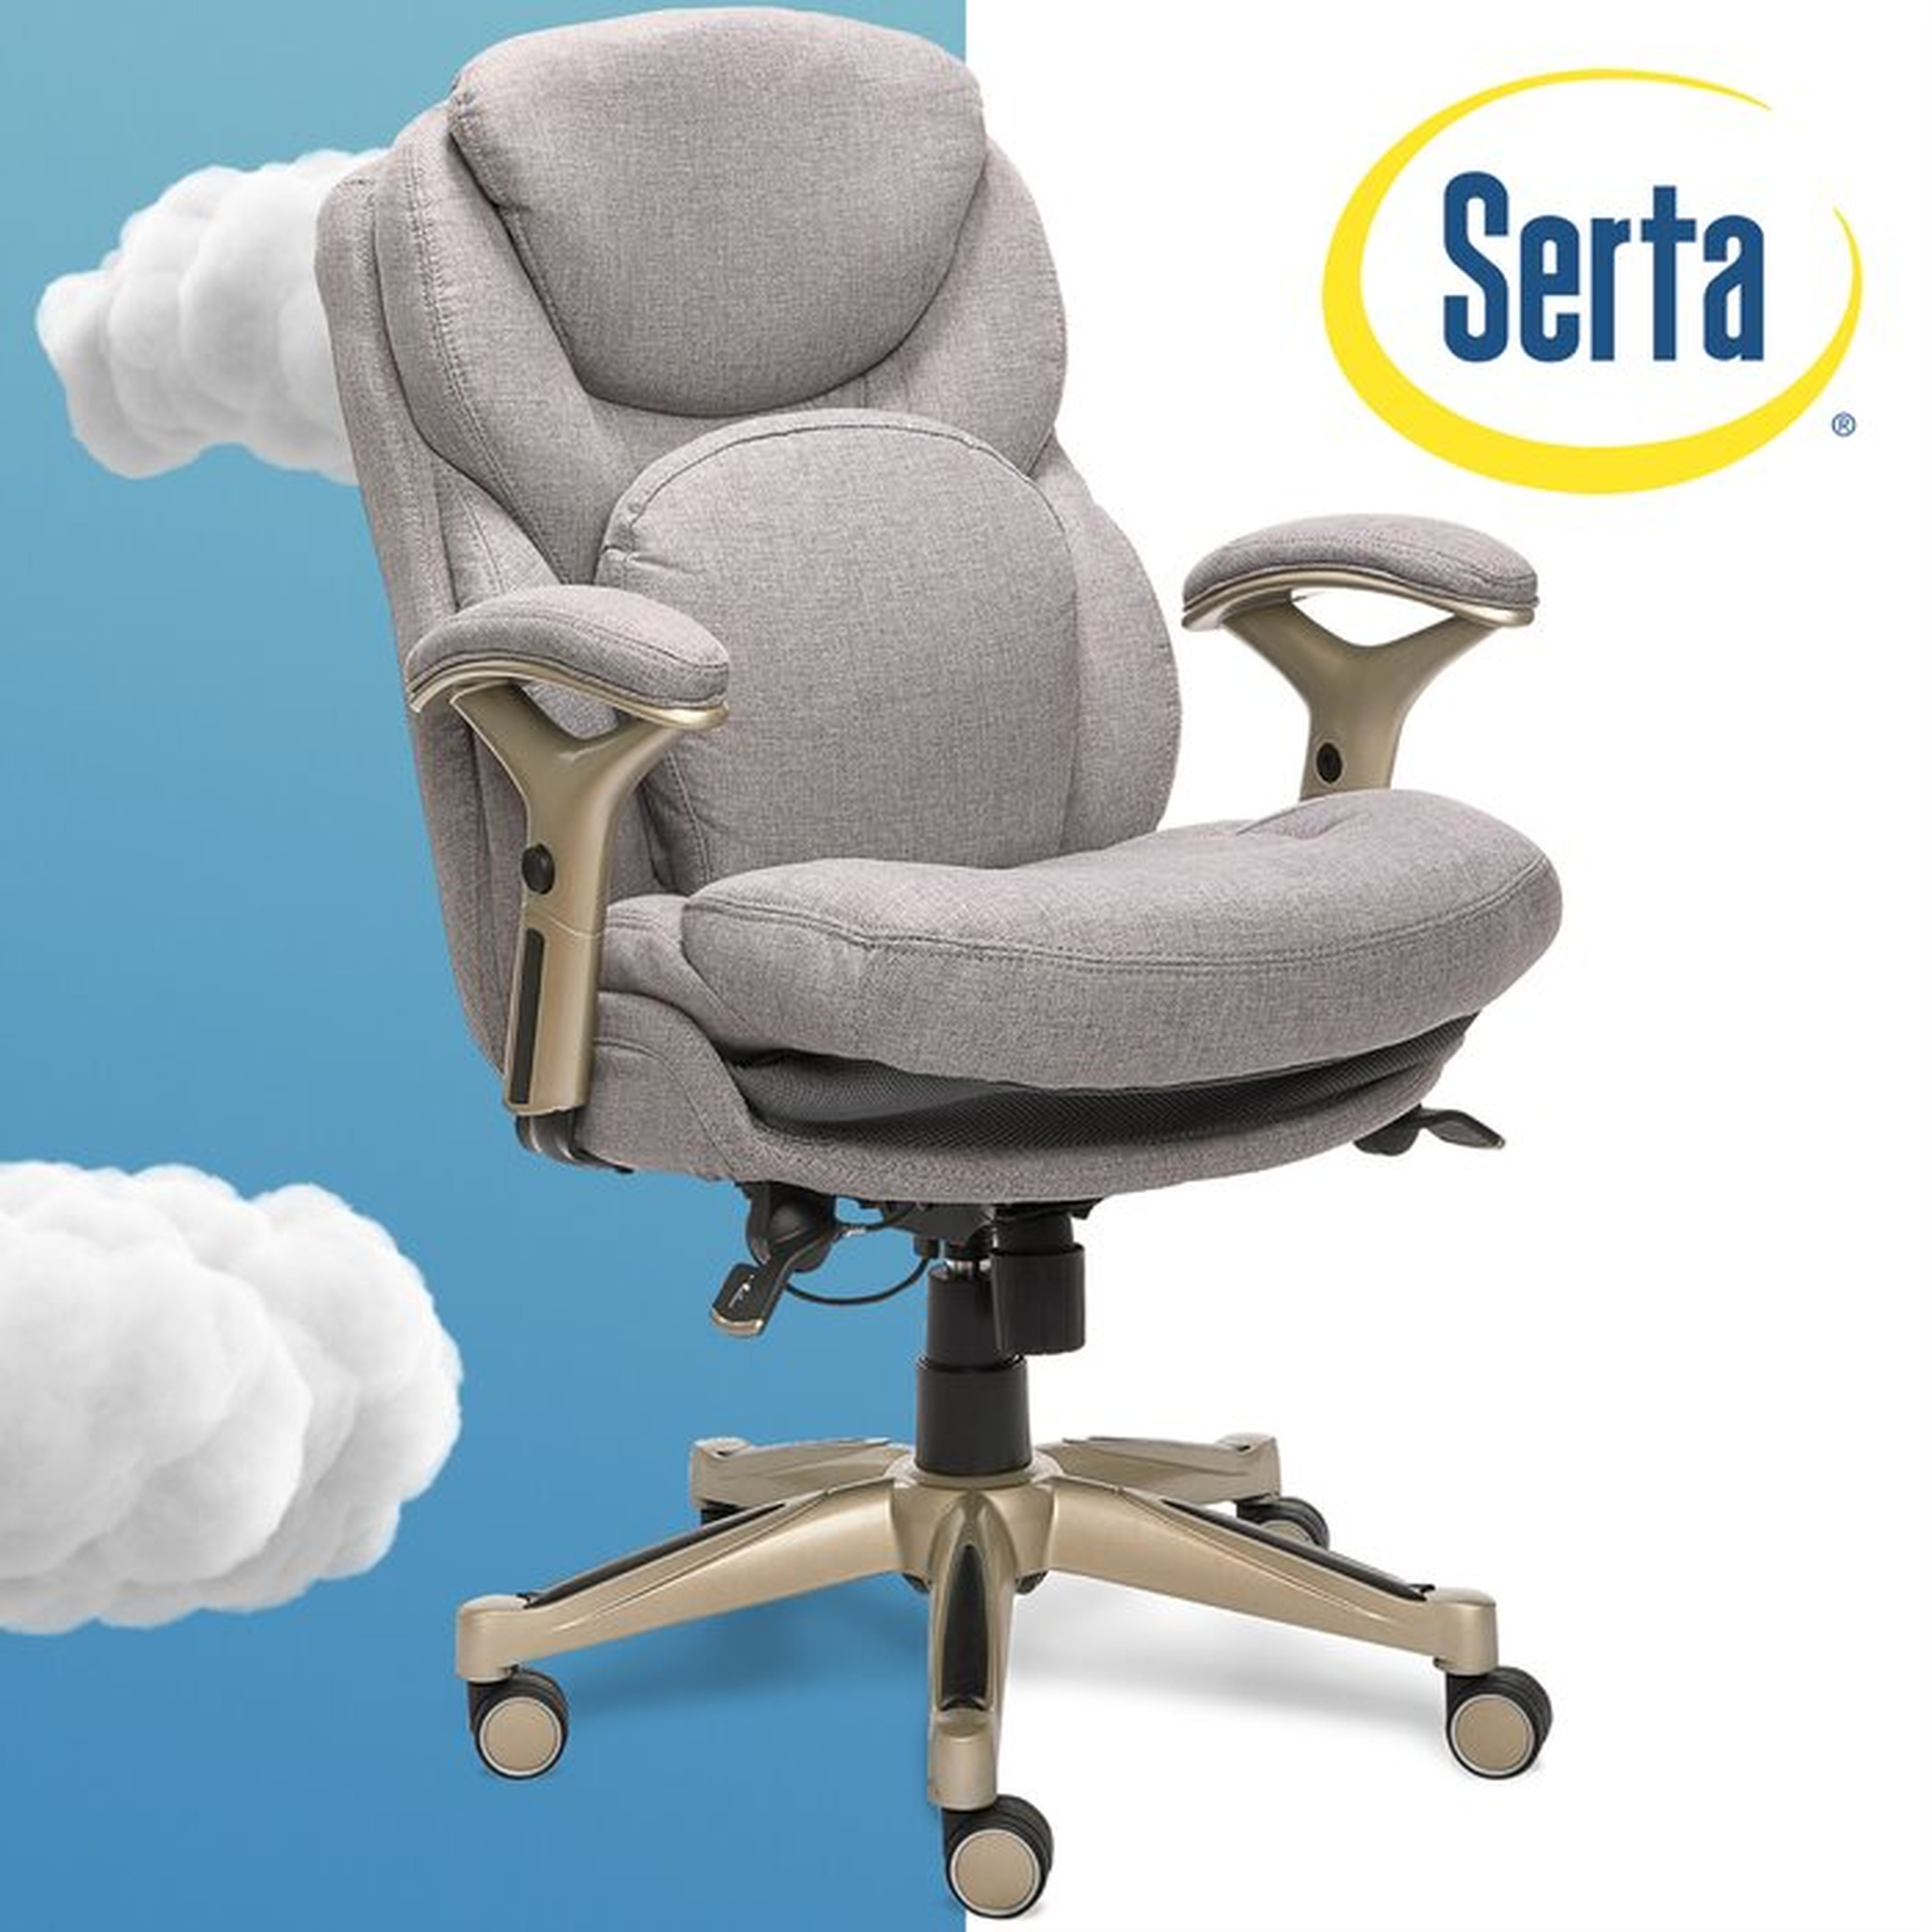 Serta Works Ergonomic Executive Chair - Wayfair